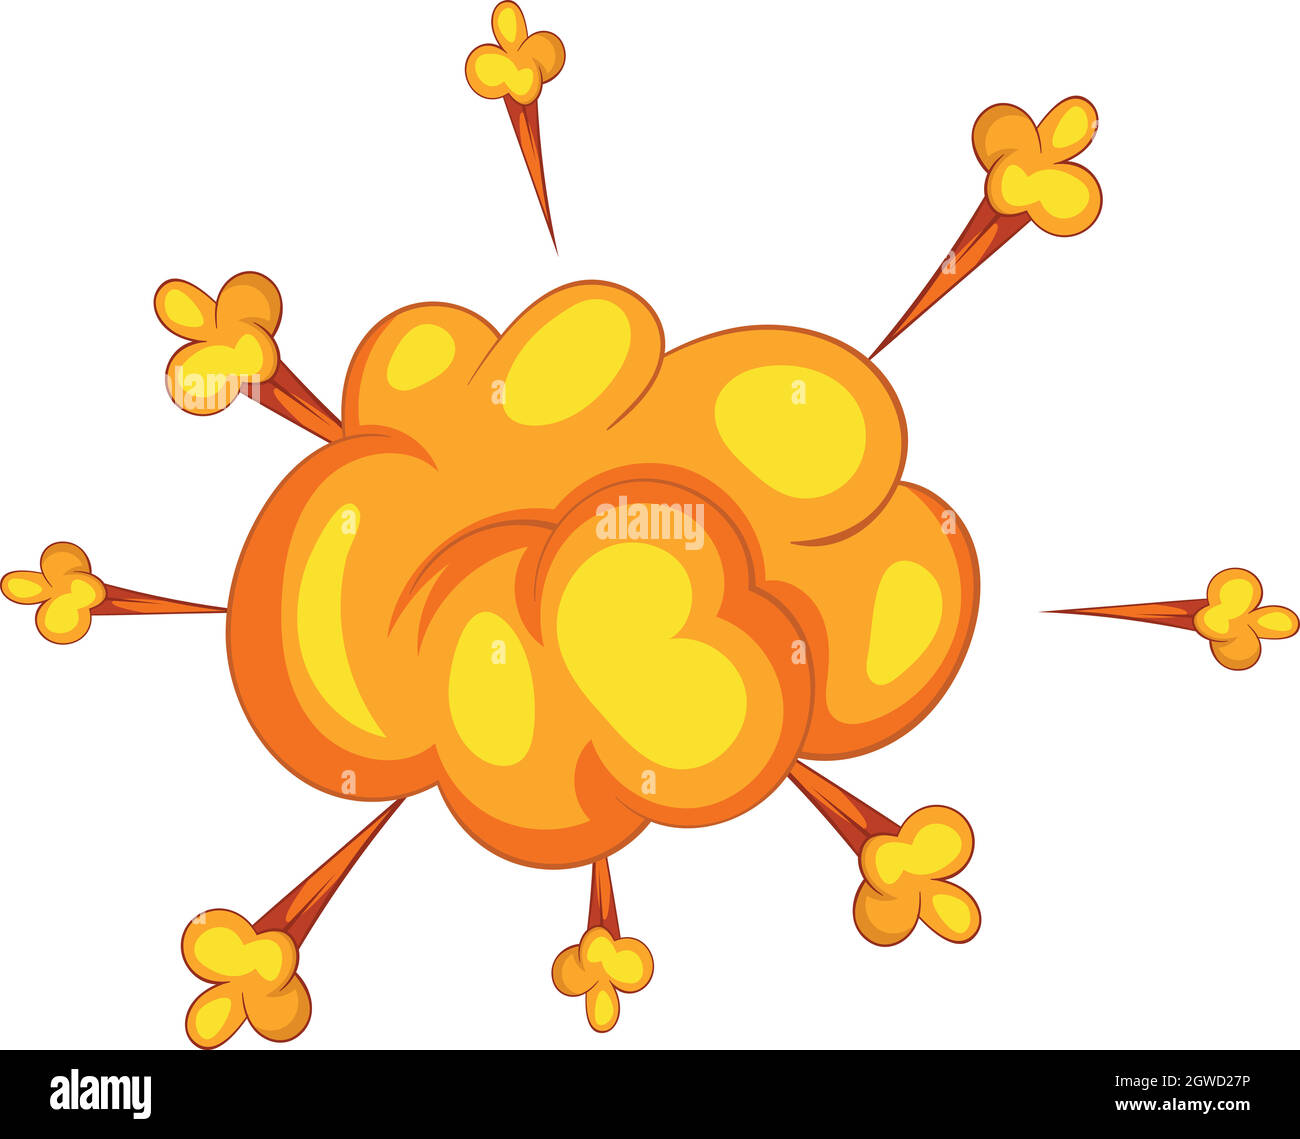 Bomb explosion icon, cartoon style Stock Vector